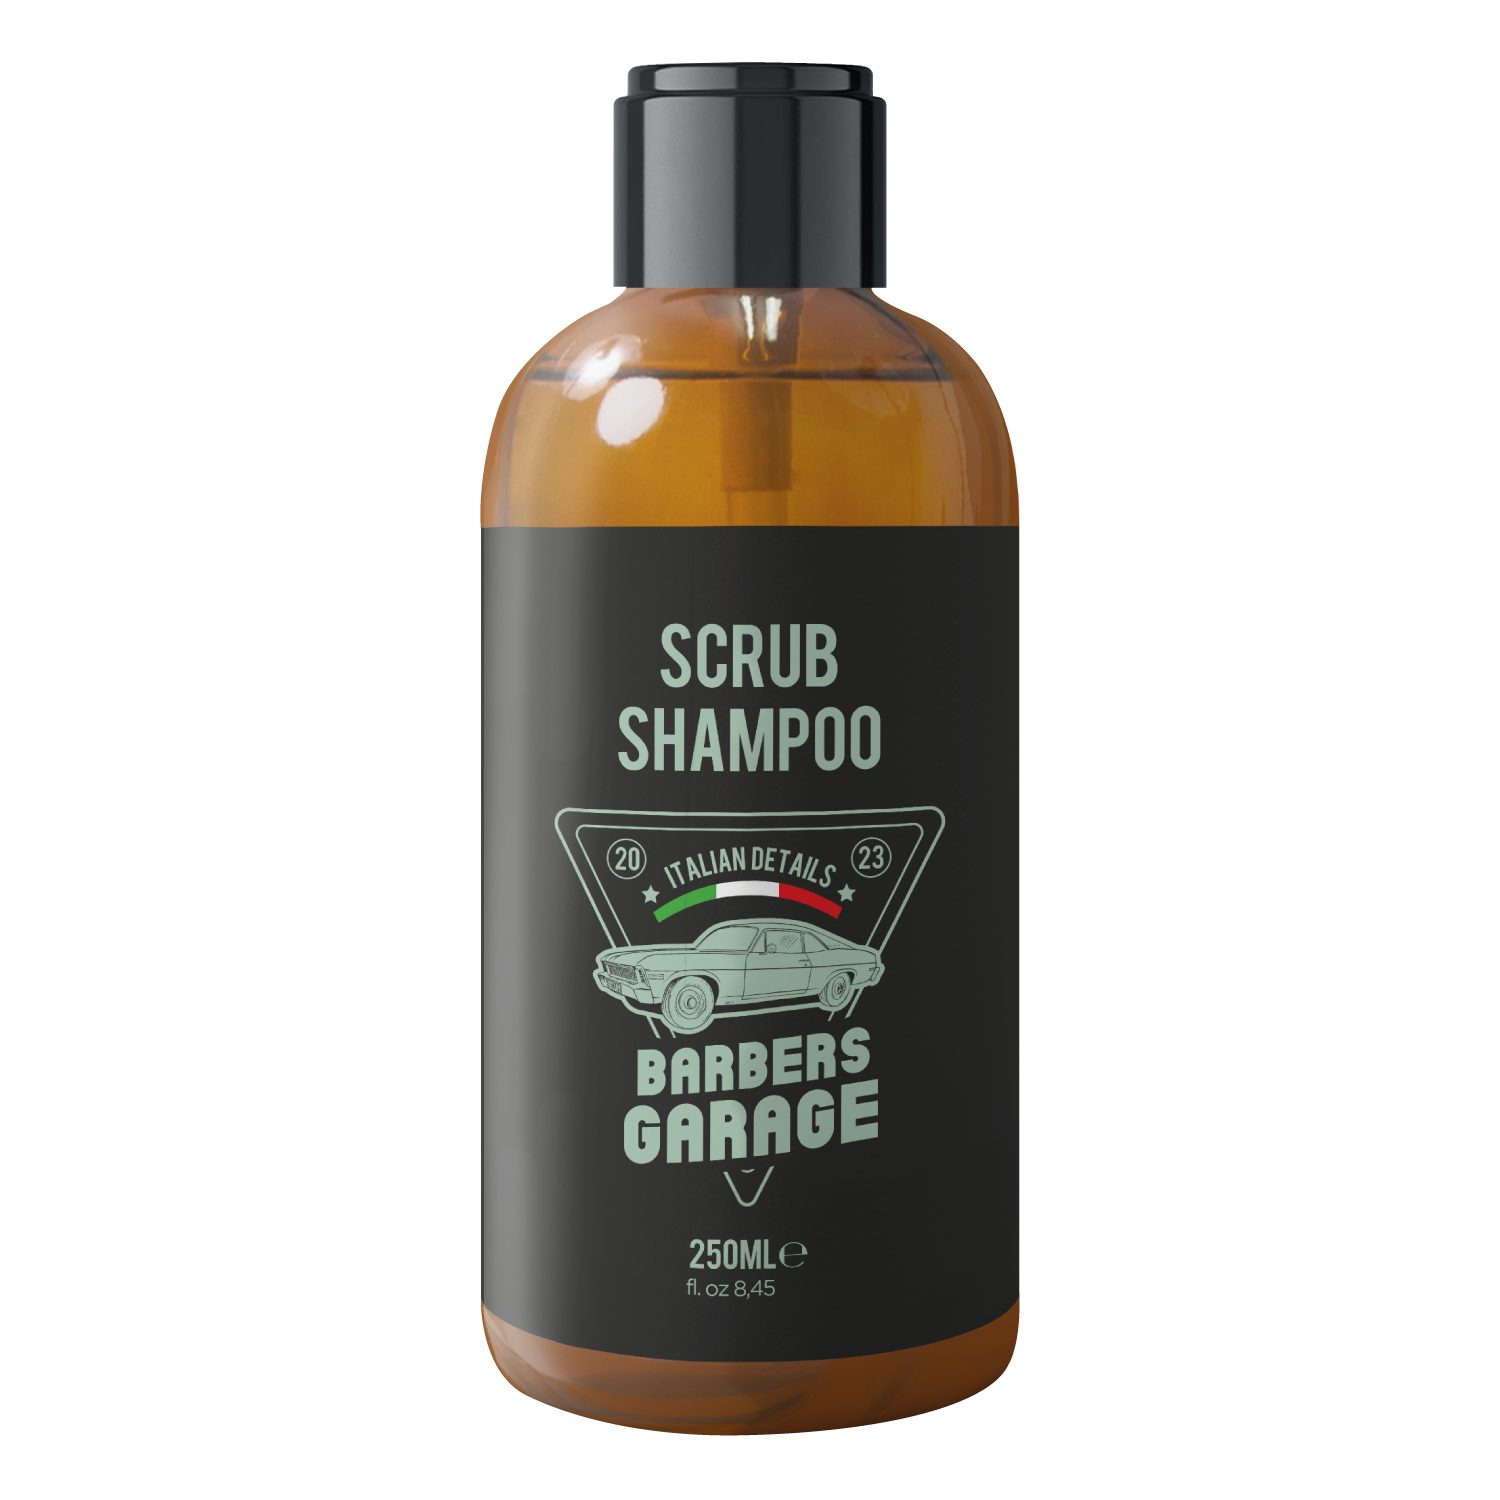 Veana Haarshampoo Barbers Garage exklusives Scrub Shampoo (250ml)